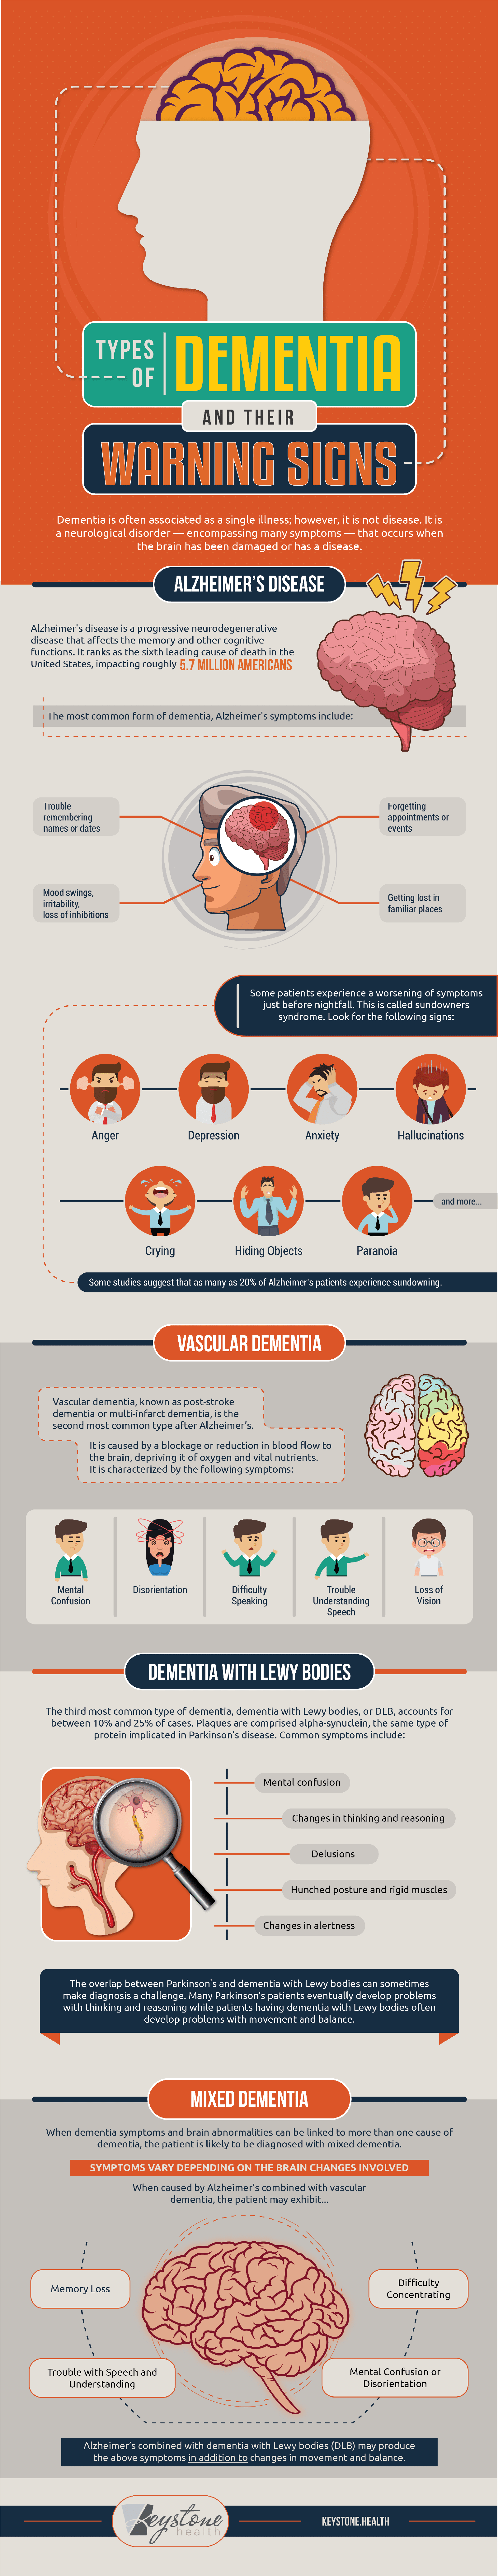 Keystone Health Dementia and Alzheimer's Infographic